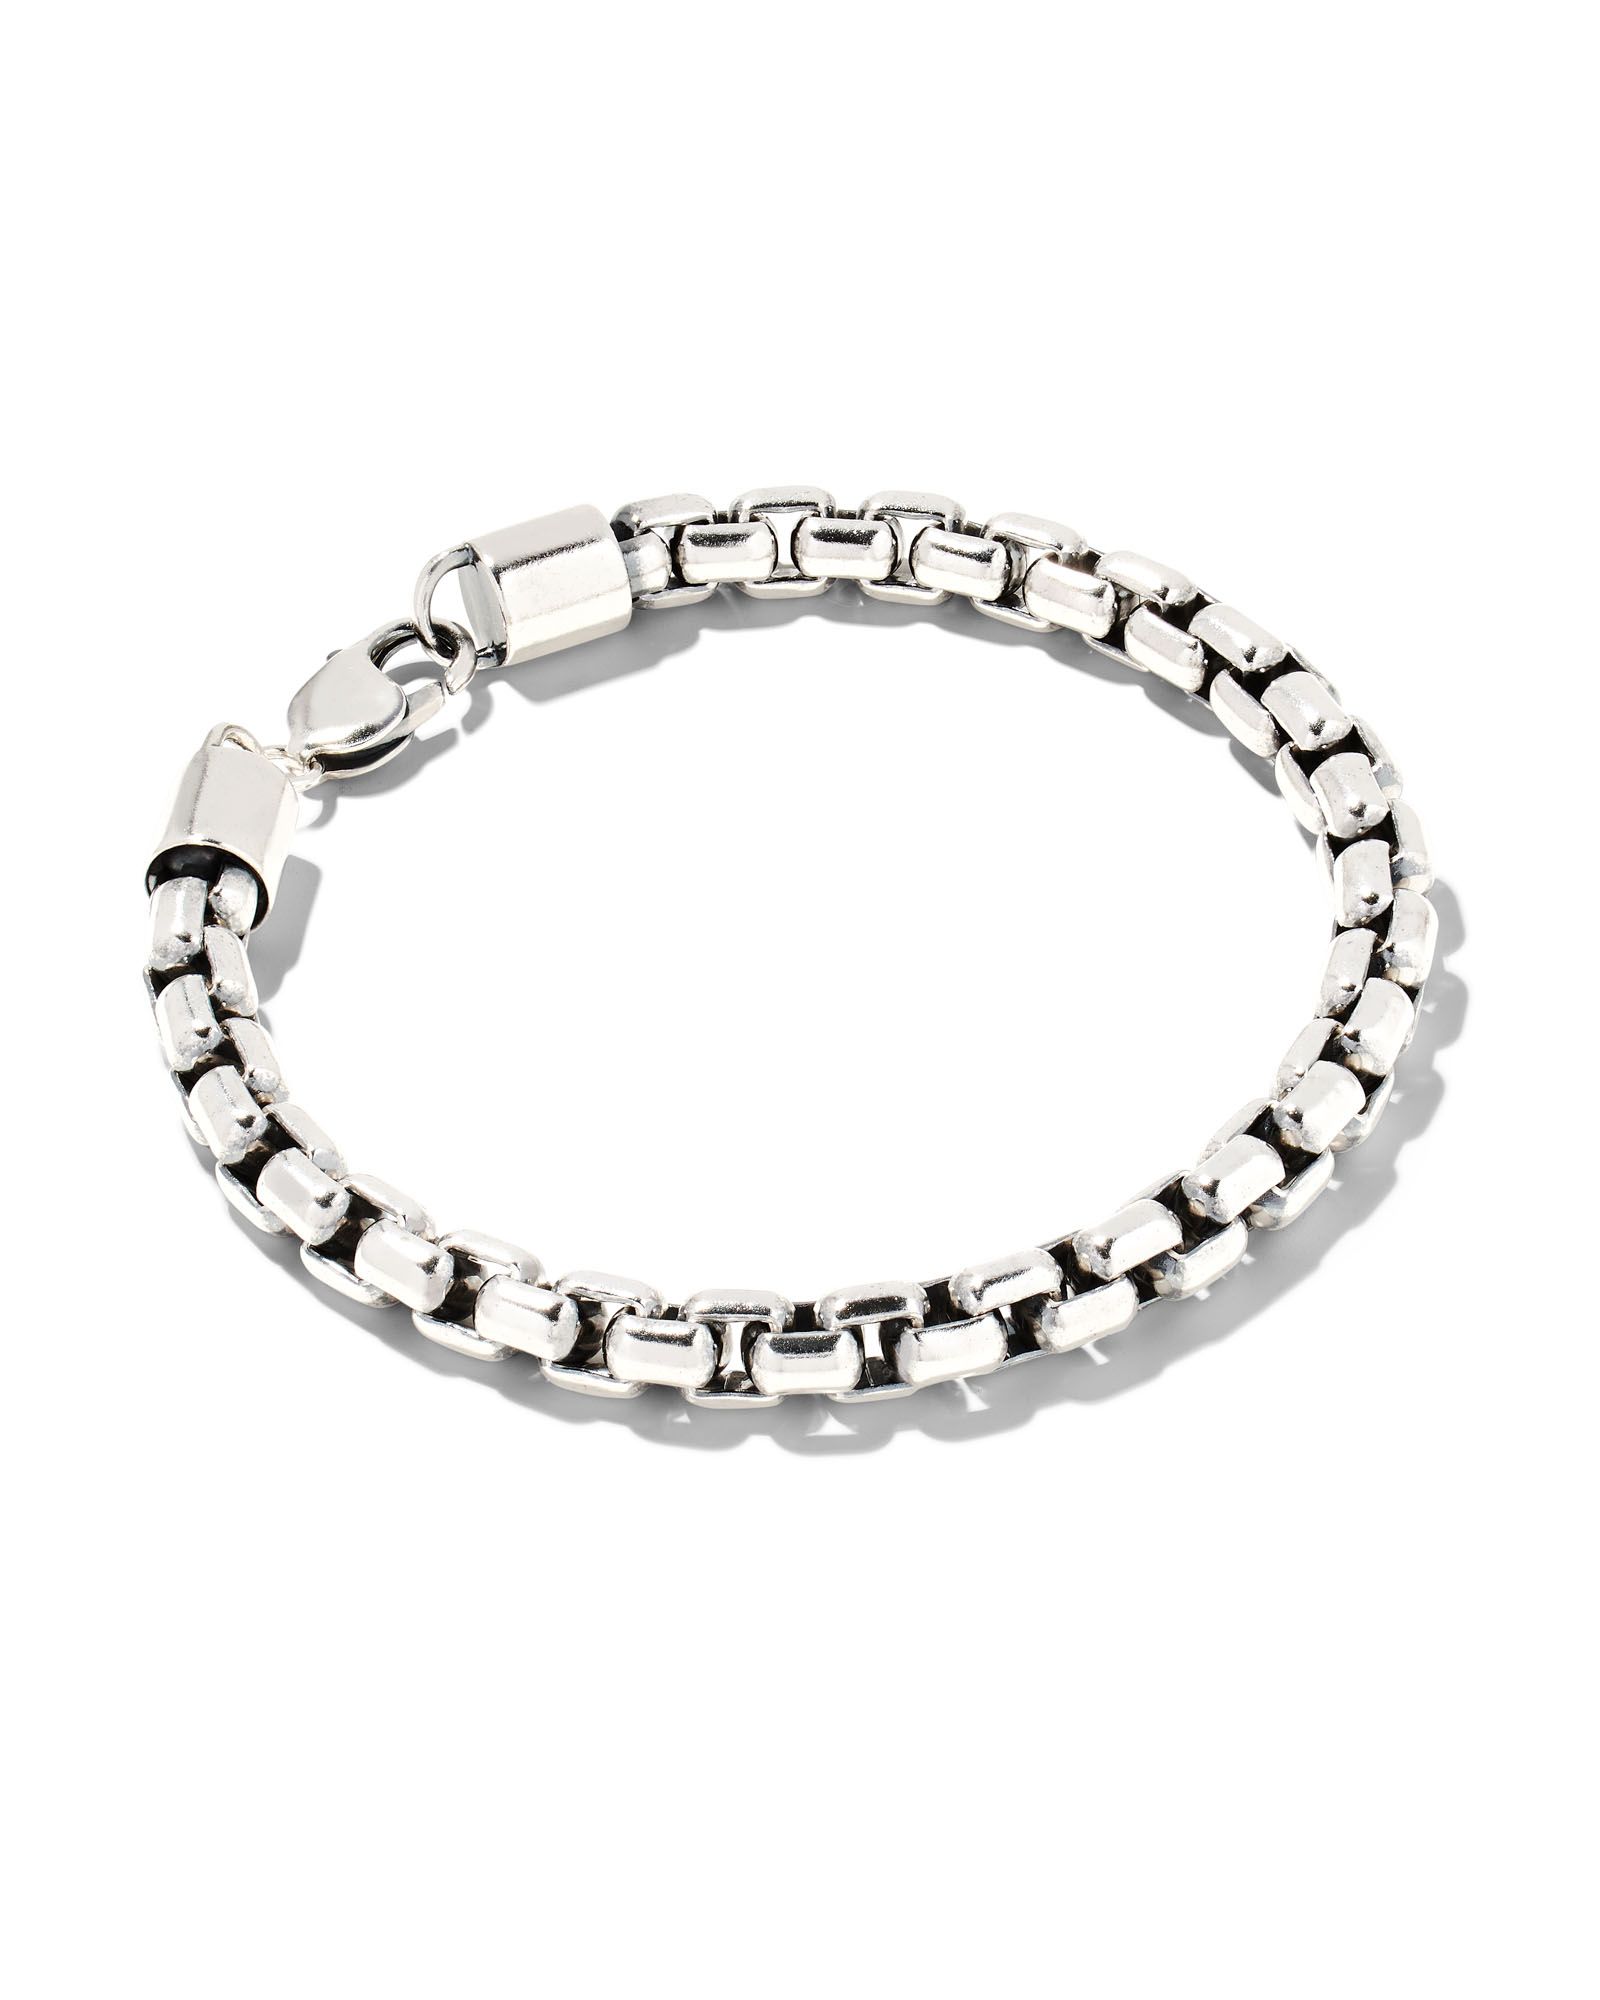 Beck Large Round Box Chain Bracelet in Oxidized Sterling Silver | Kendra Scott | Kendra Scott